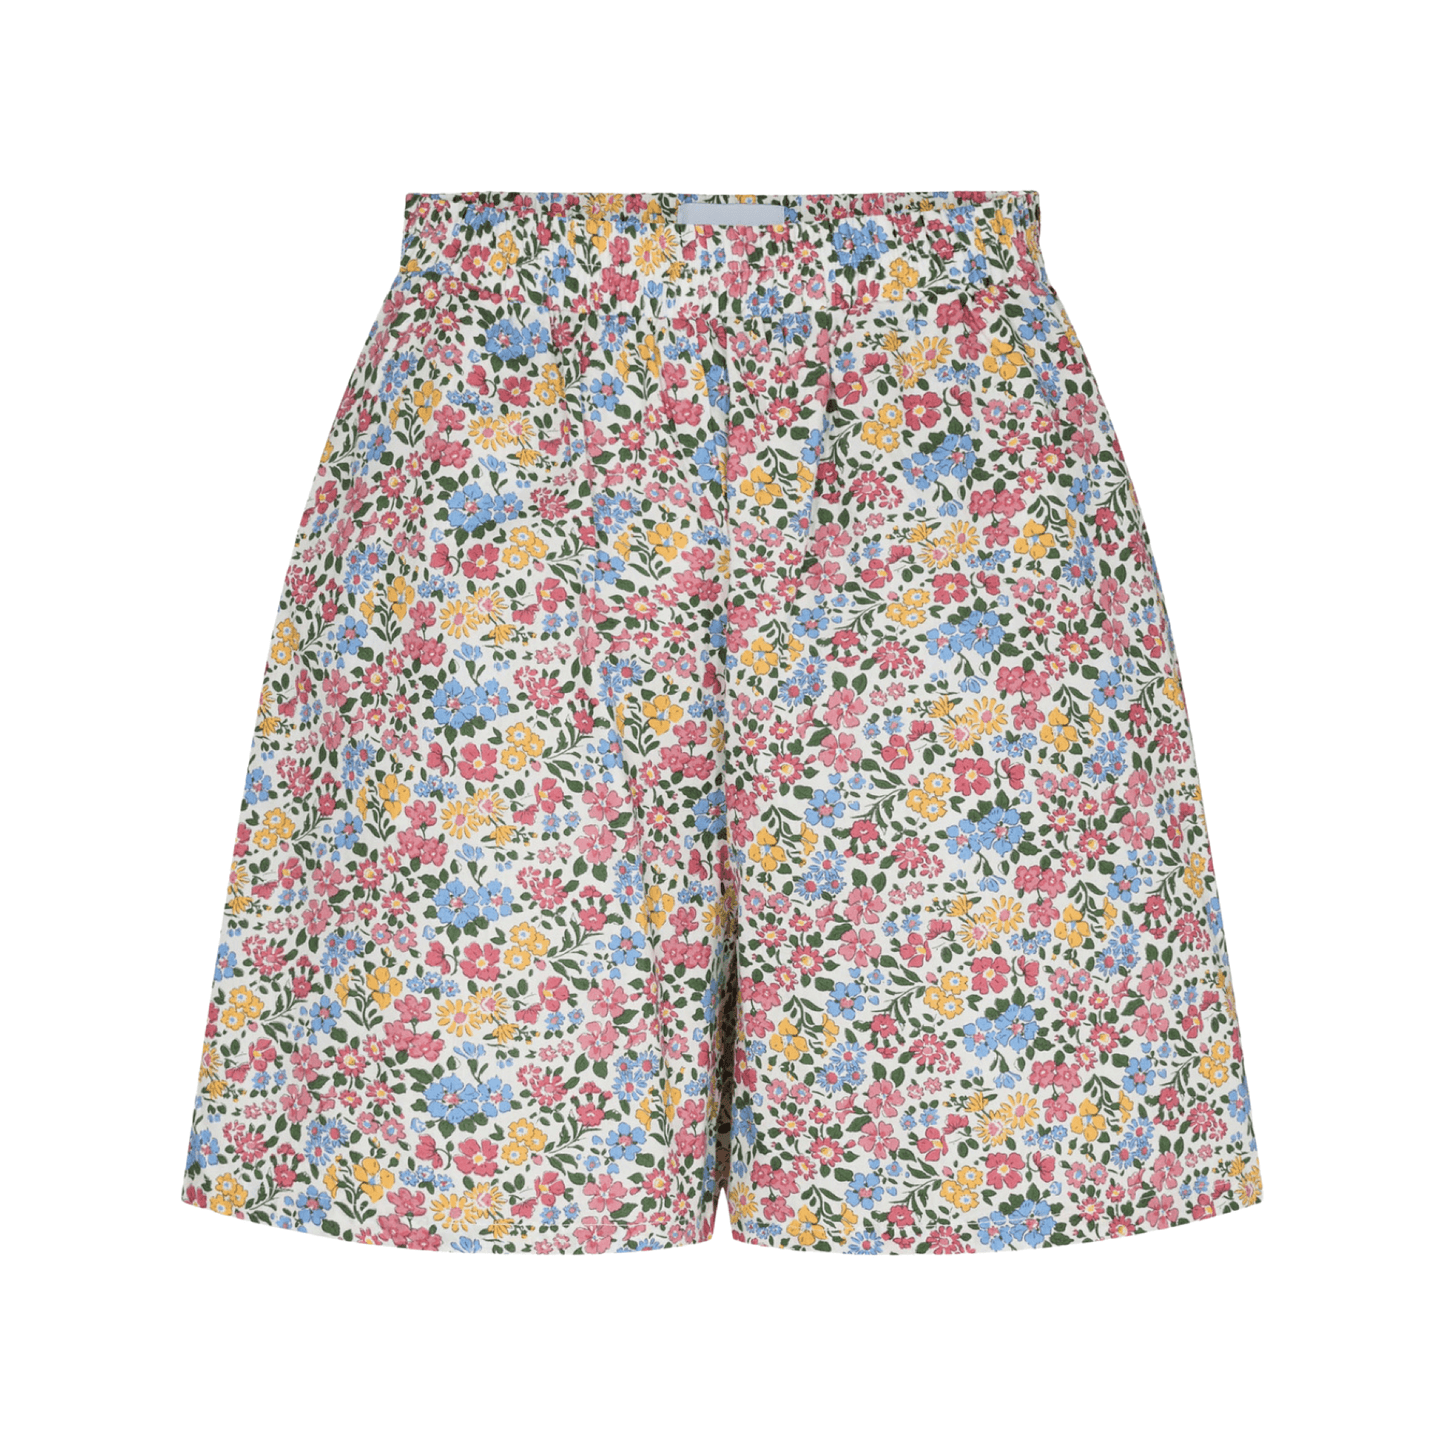 Liberte- Sara shorts - multi color flower